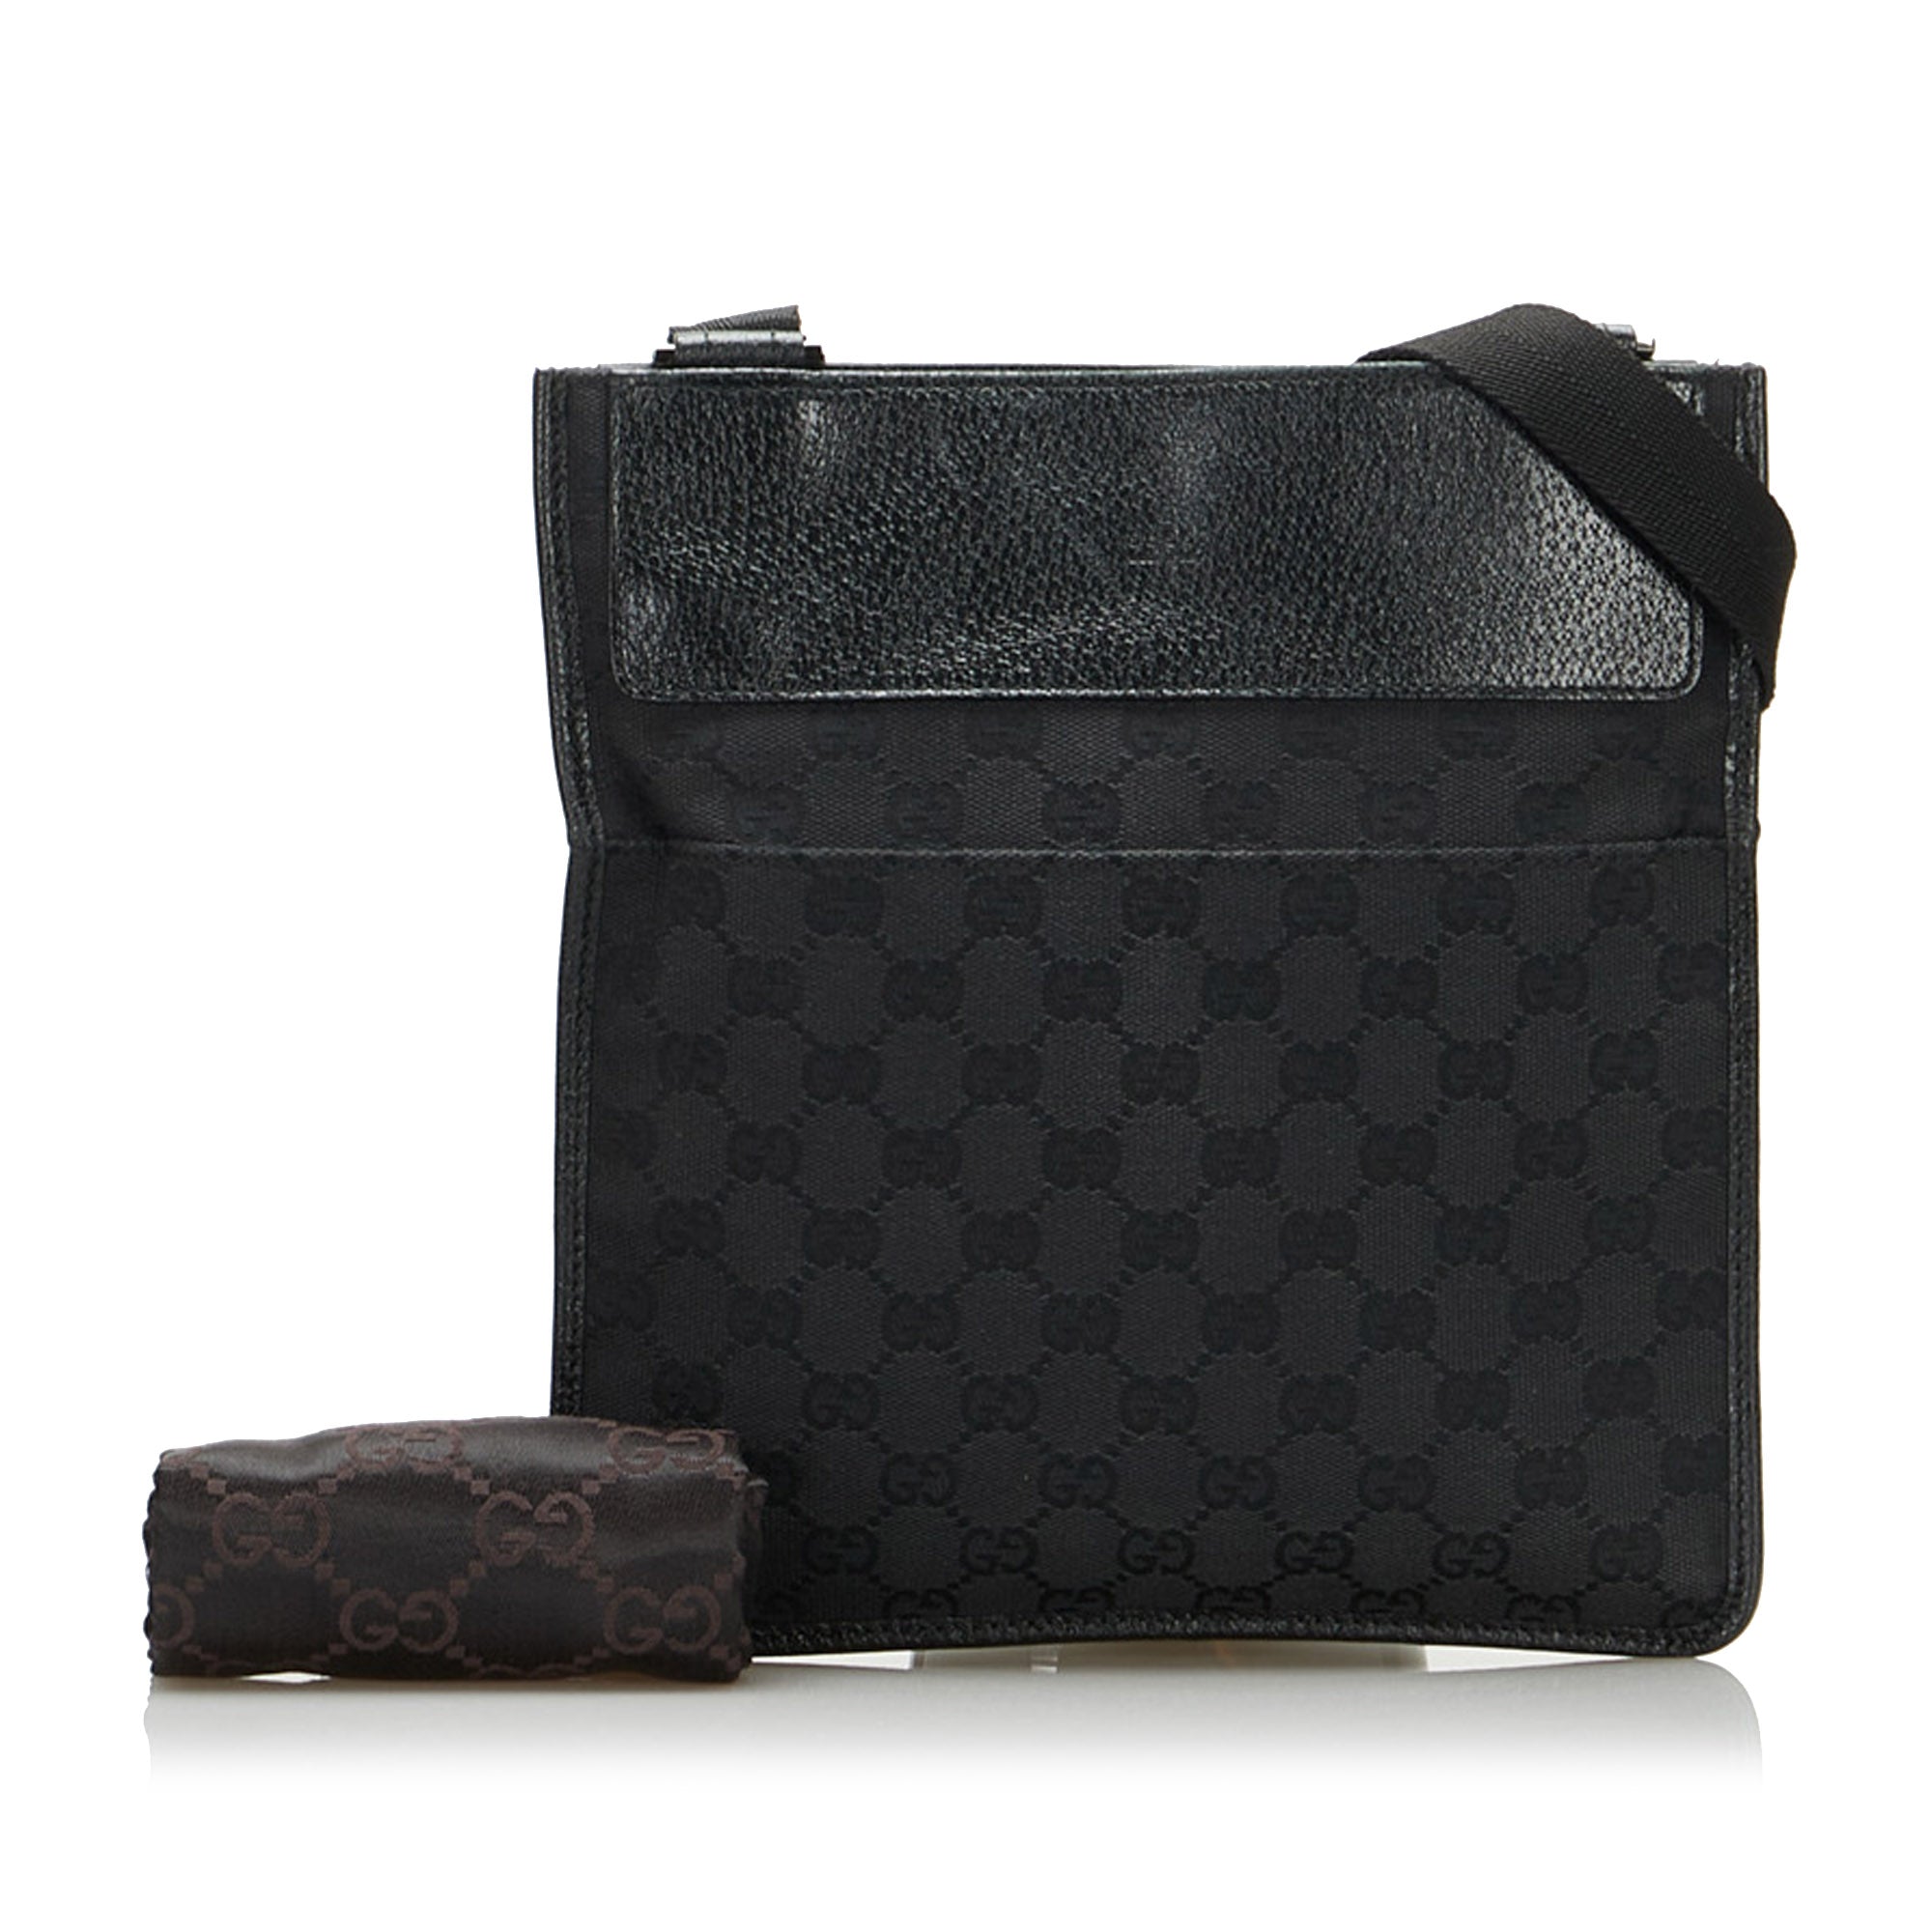 Black GG-jacquard coated-canvas cross-body bag, Gucci